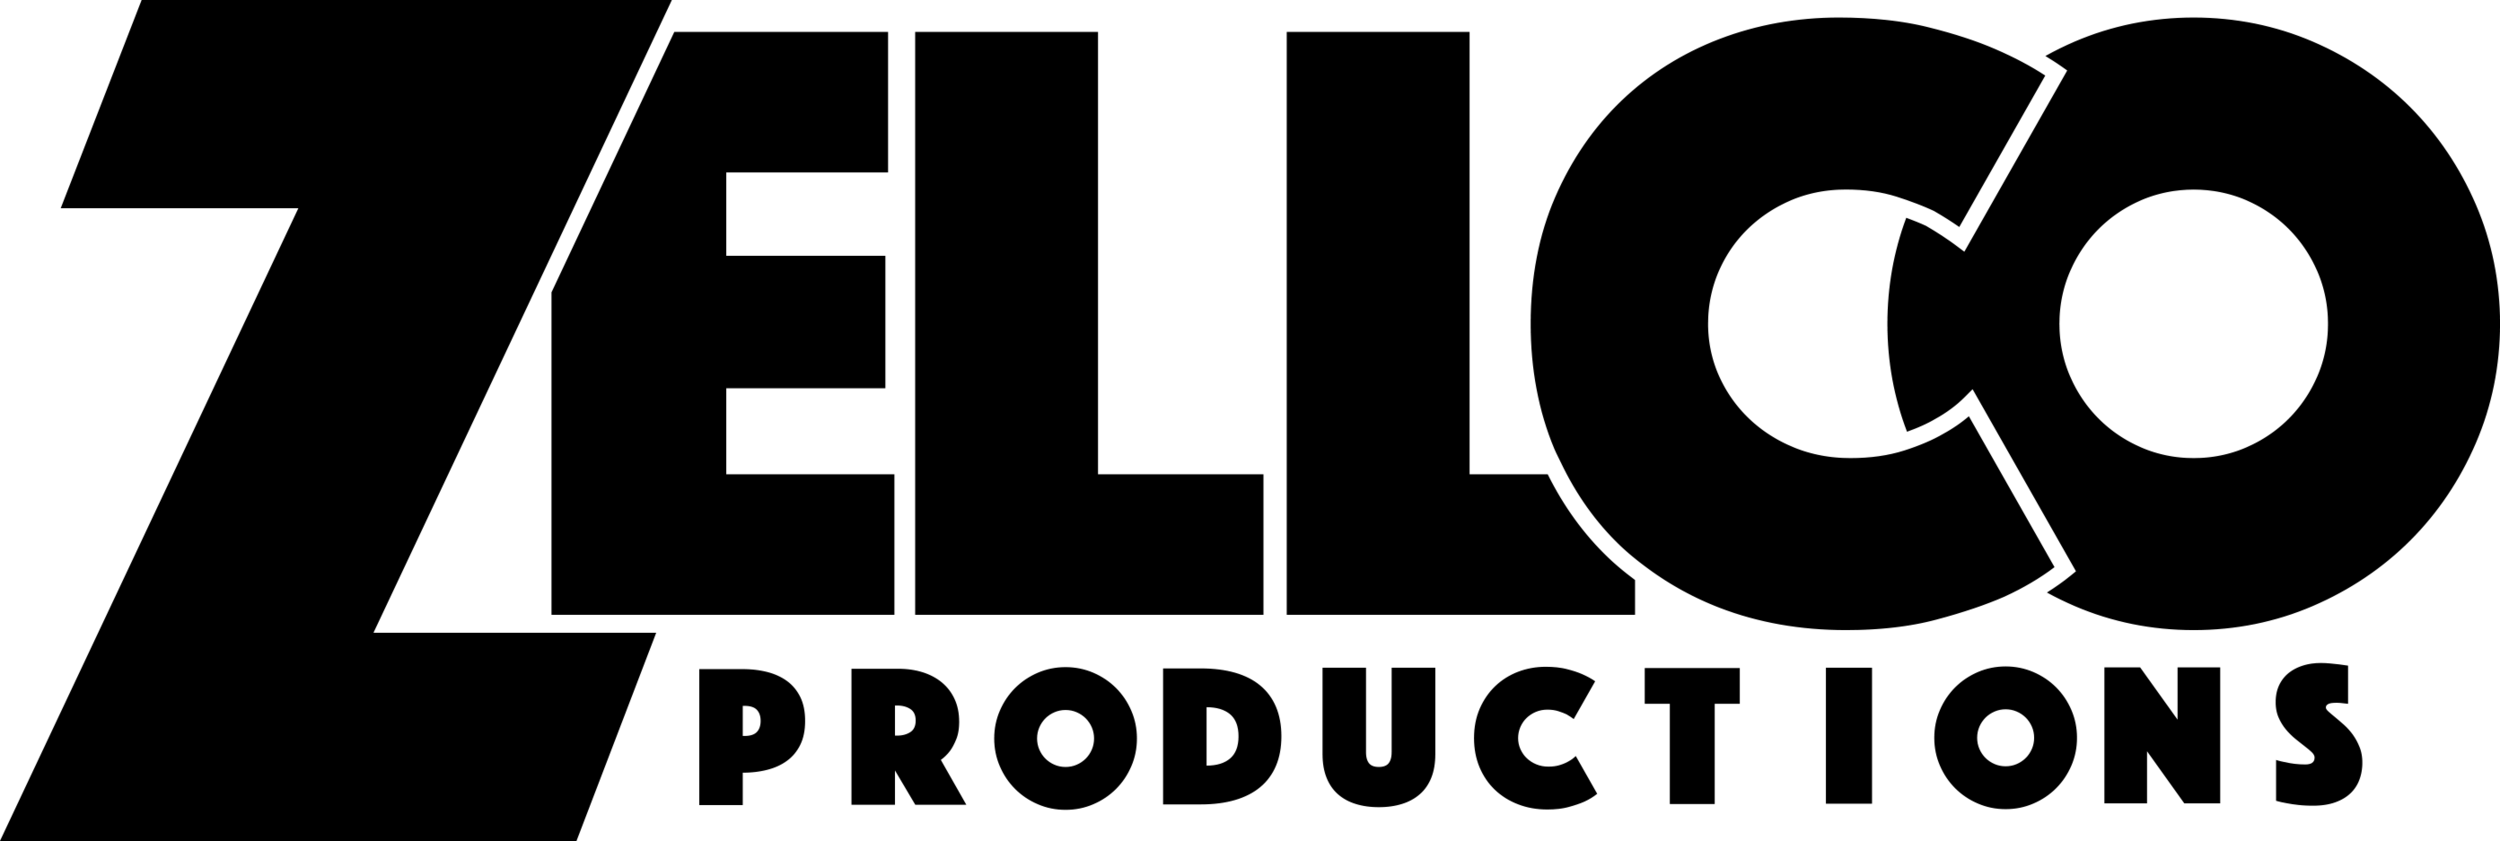 ZellcoProductions-logo-transparent-black.png